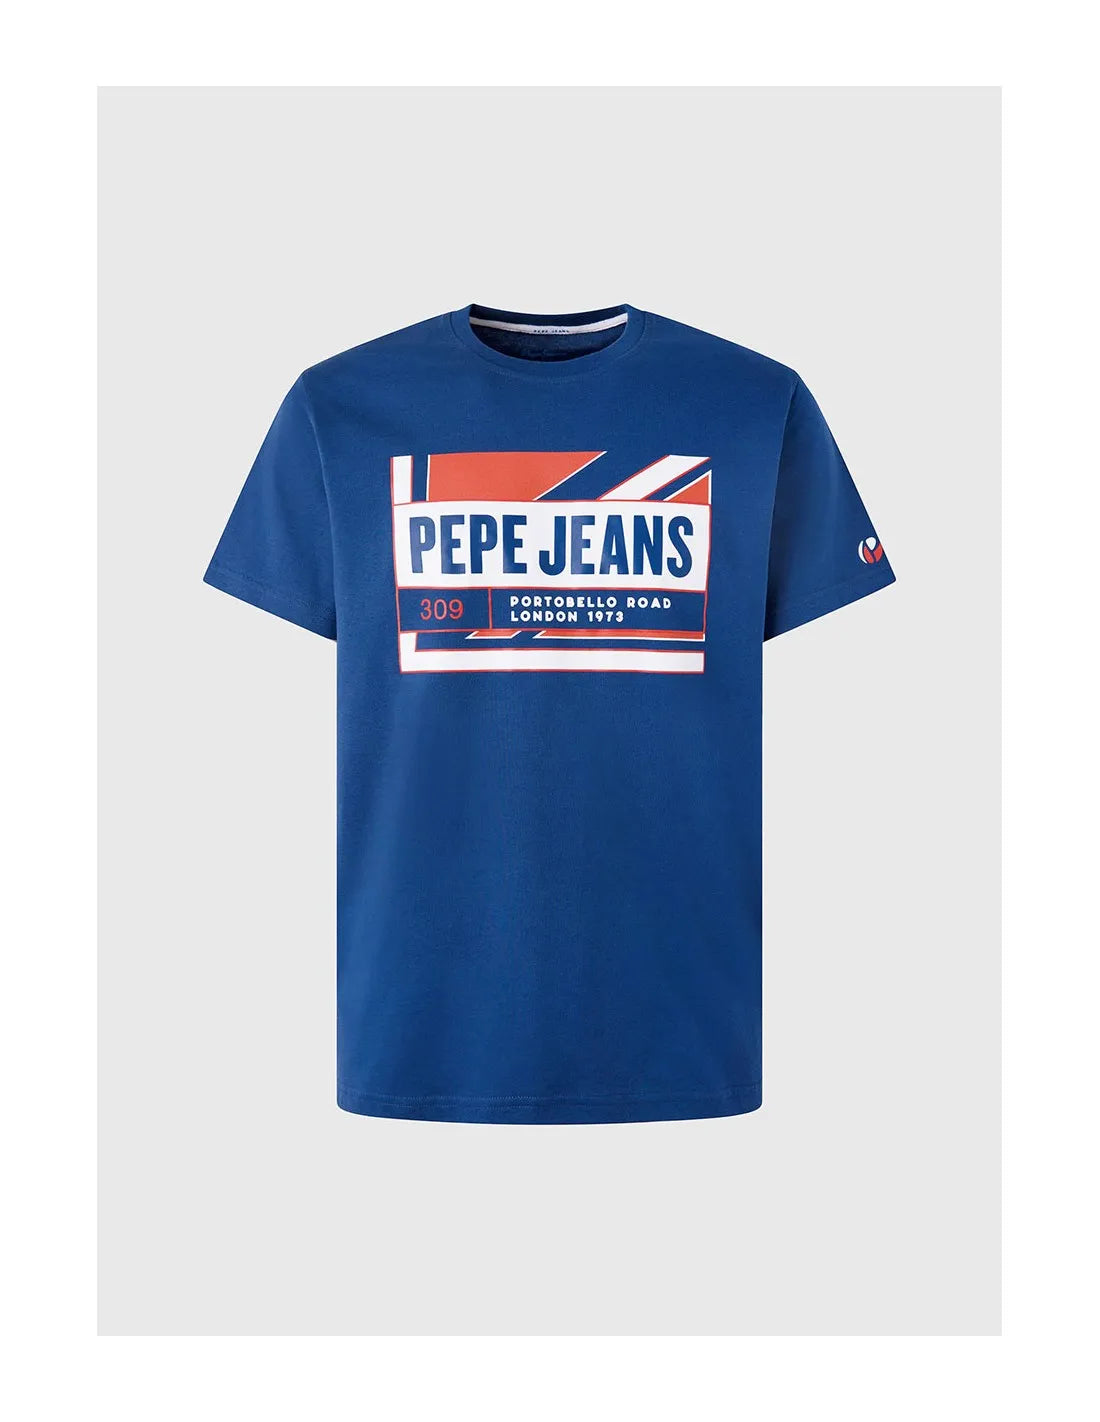 Pepe Jeans Adelard Men's T-Shirt - Perfect For Men Urnban Adventures